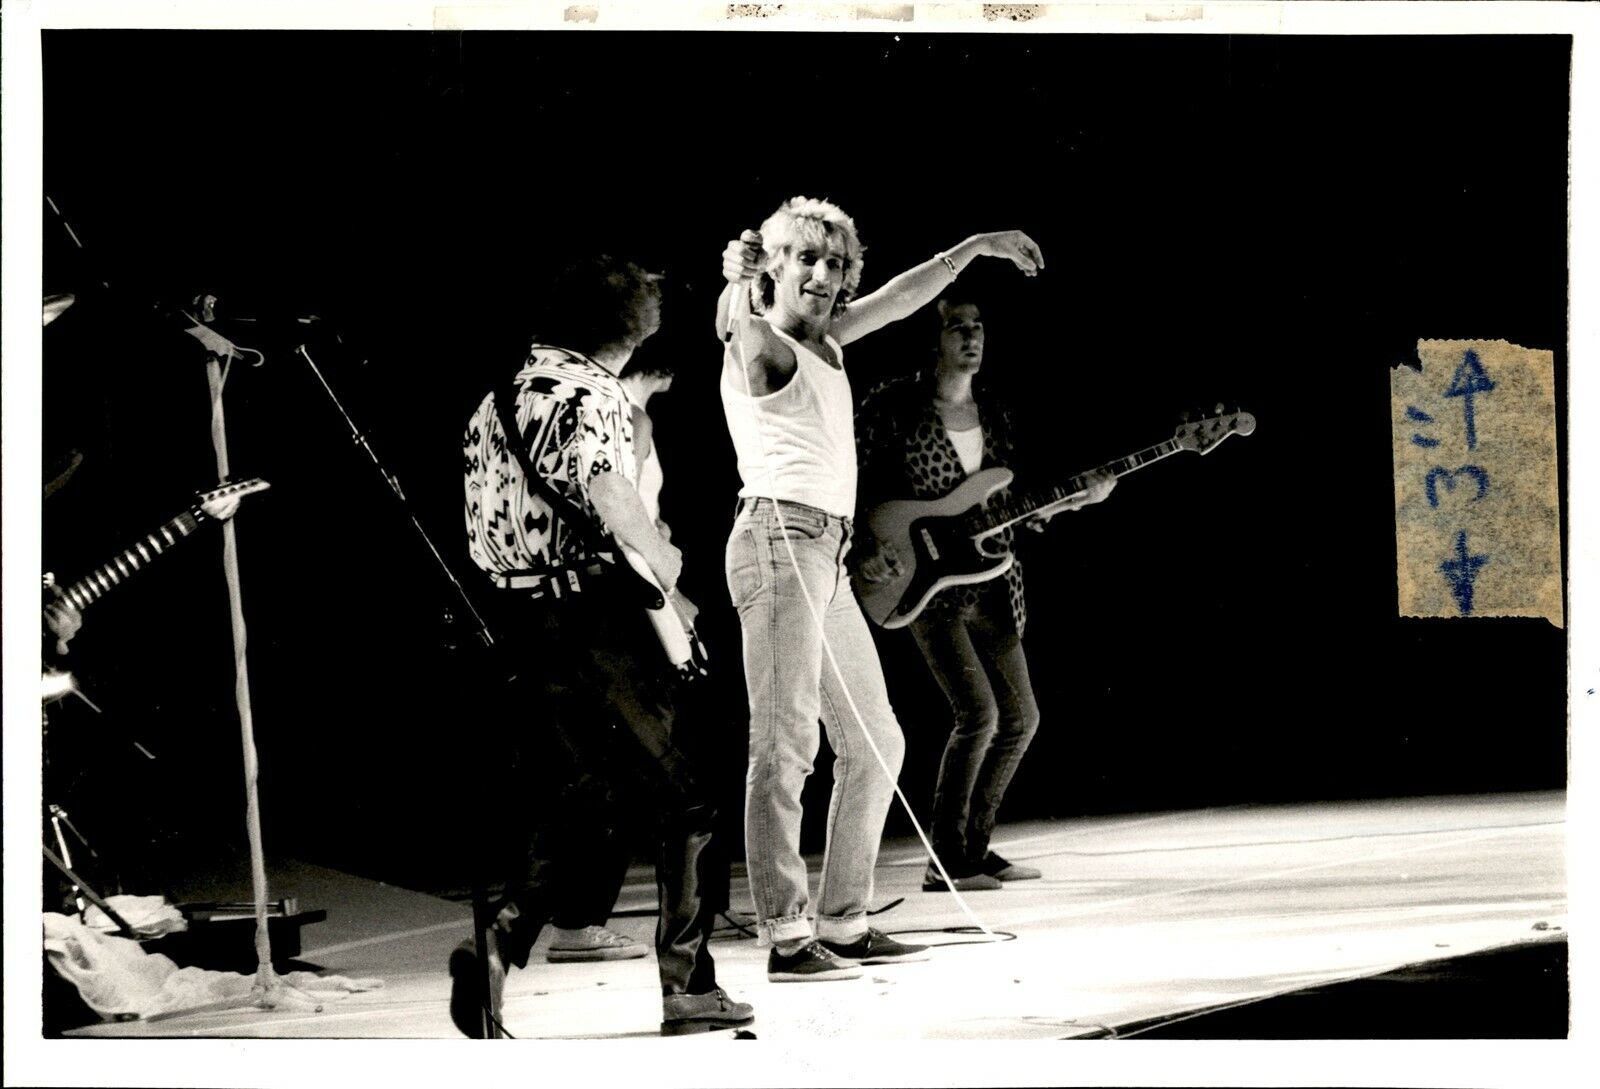 LG957 Original Photo ROD STEWART British Music Icon Performing on Stage Concert